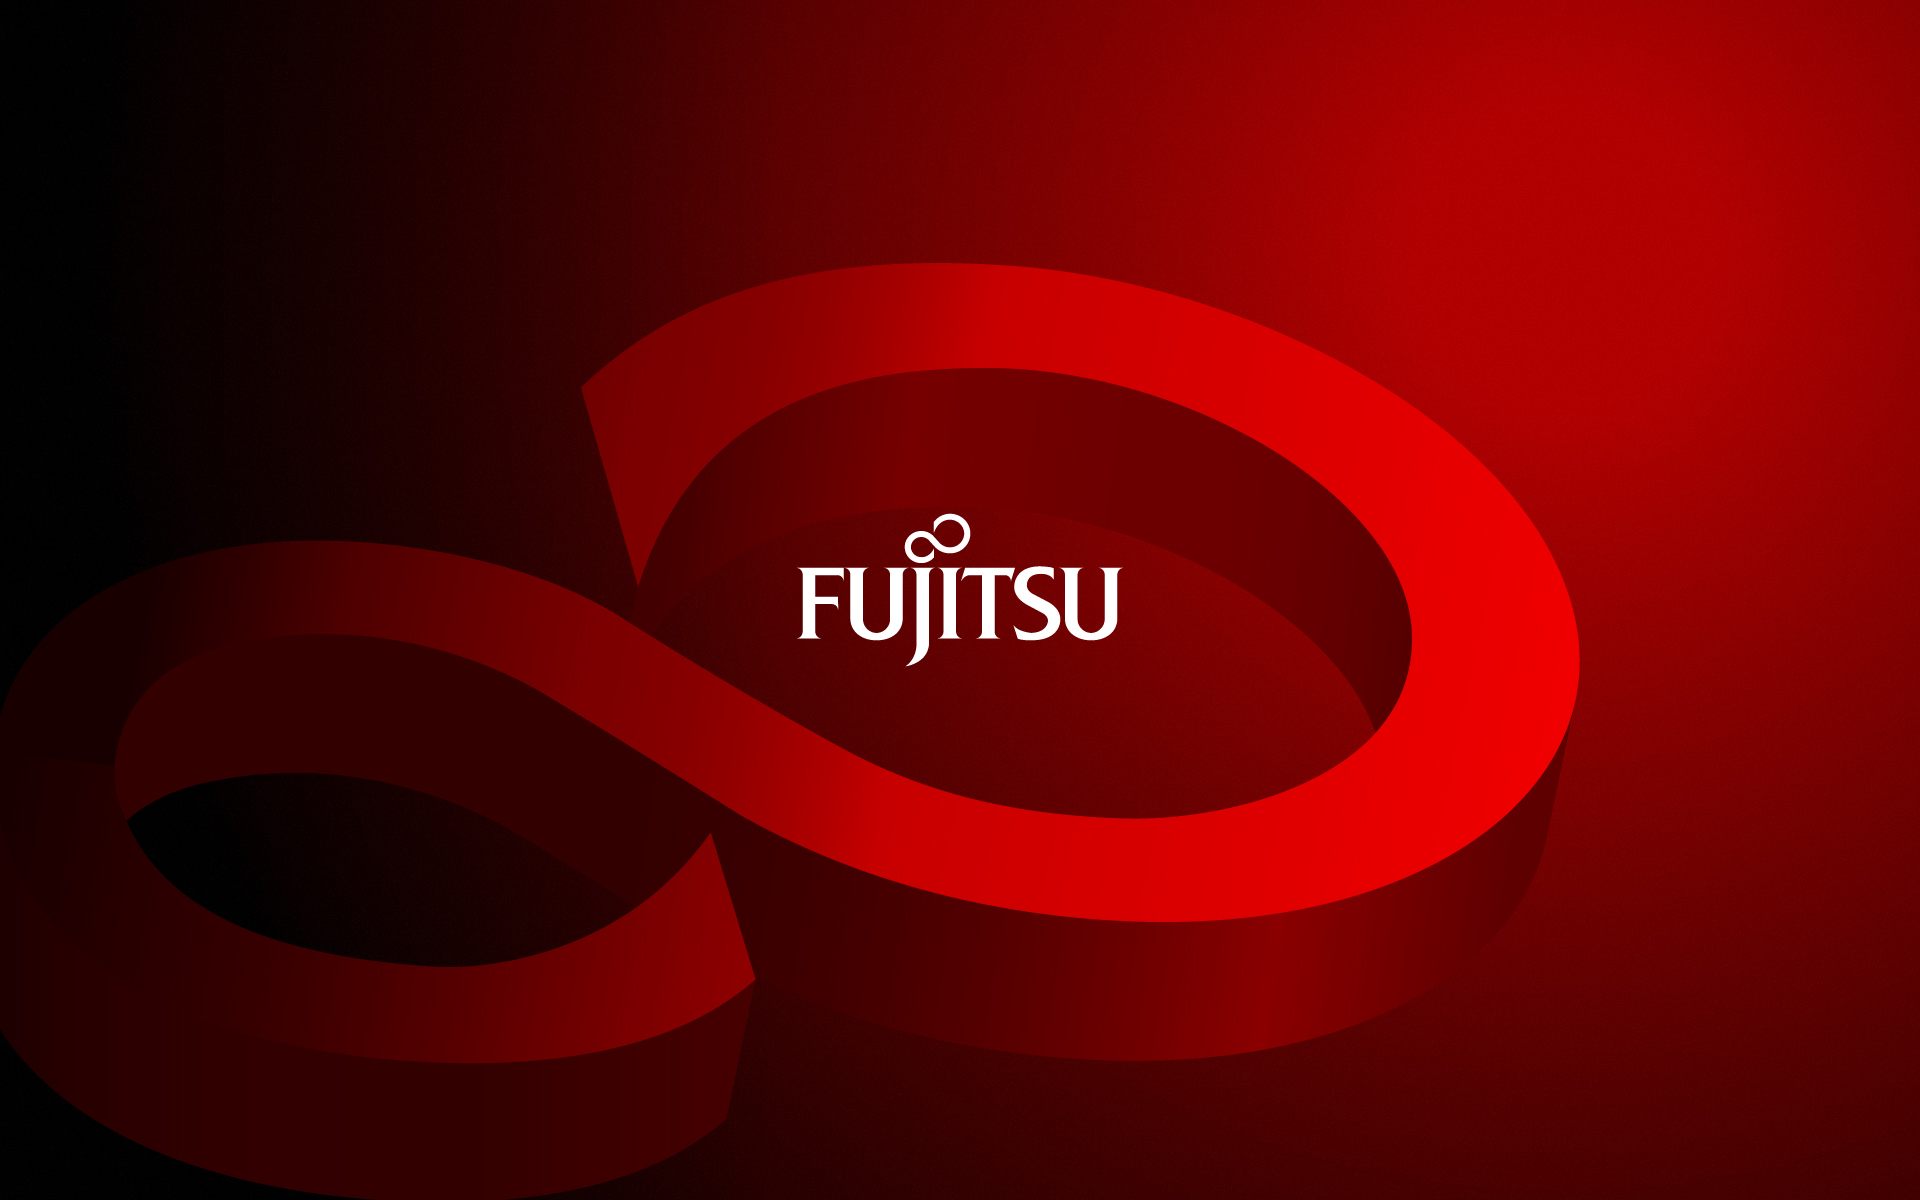 Fujitsu Wallpaper Pc Doctor Ardee